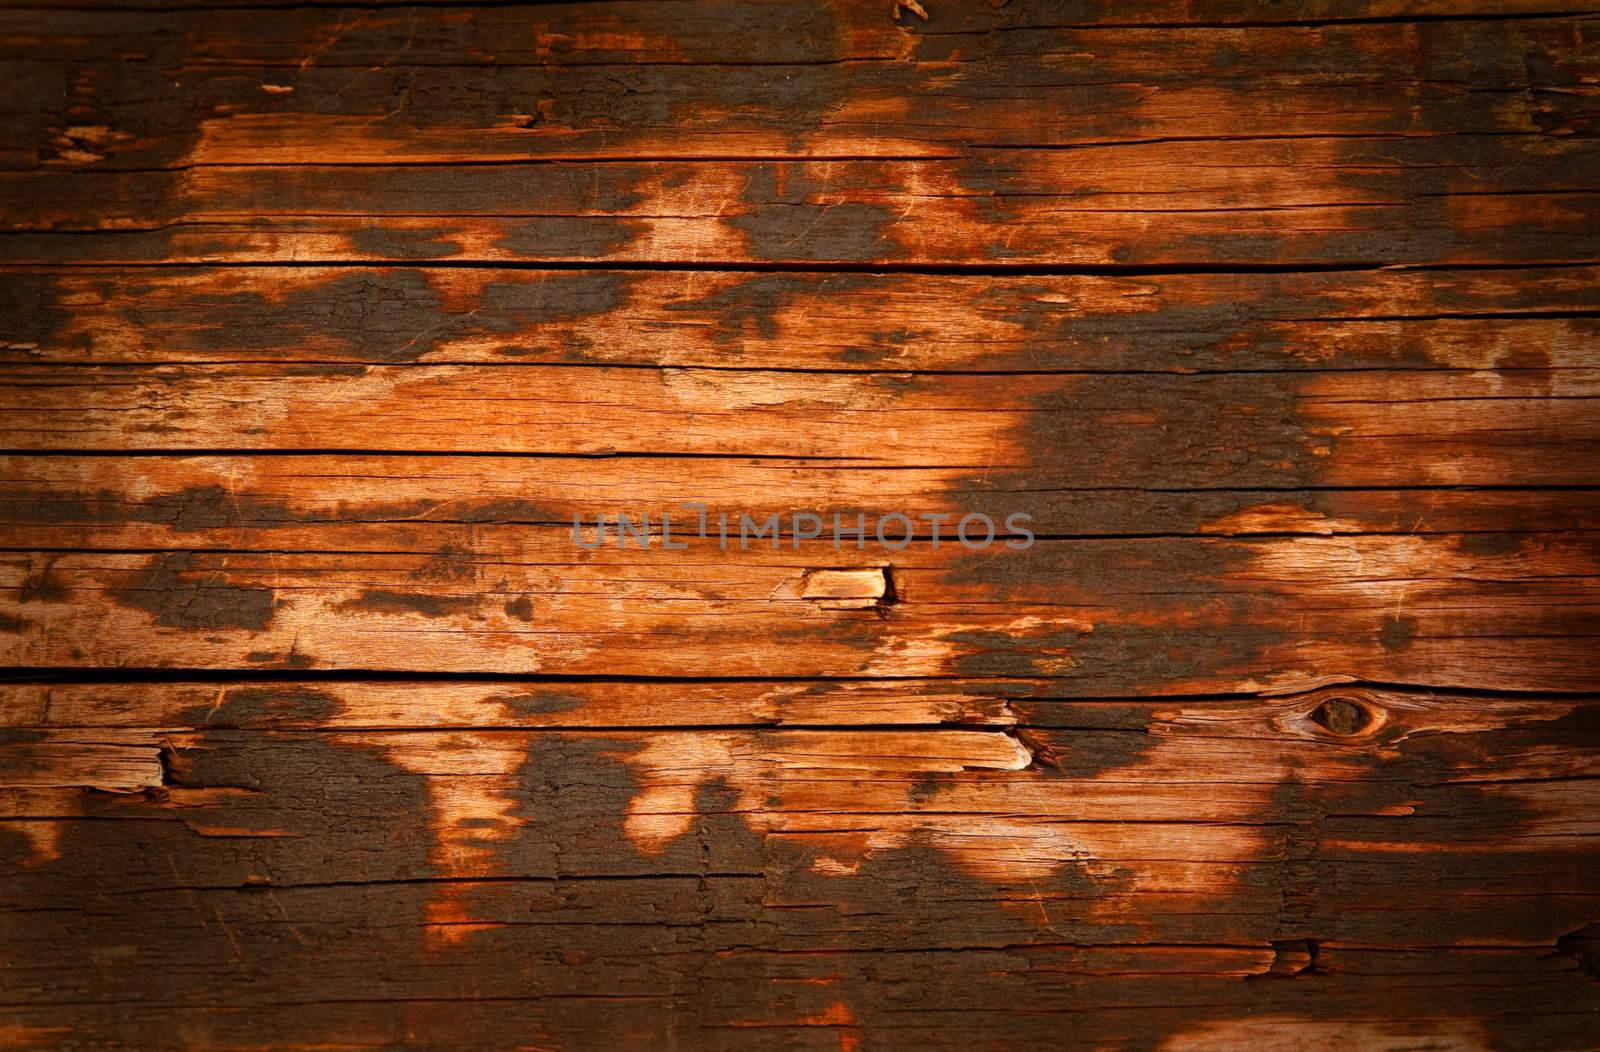 Wooden paneling, old wood grunge background